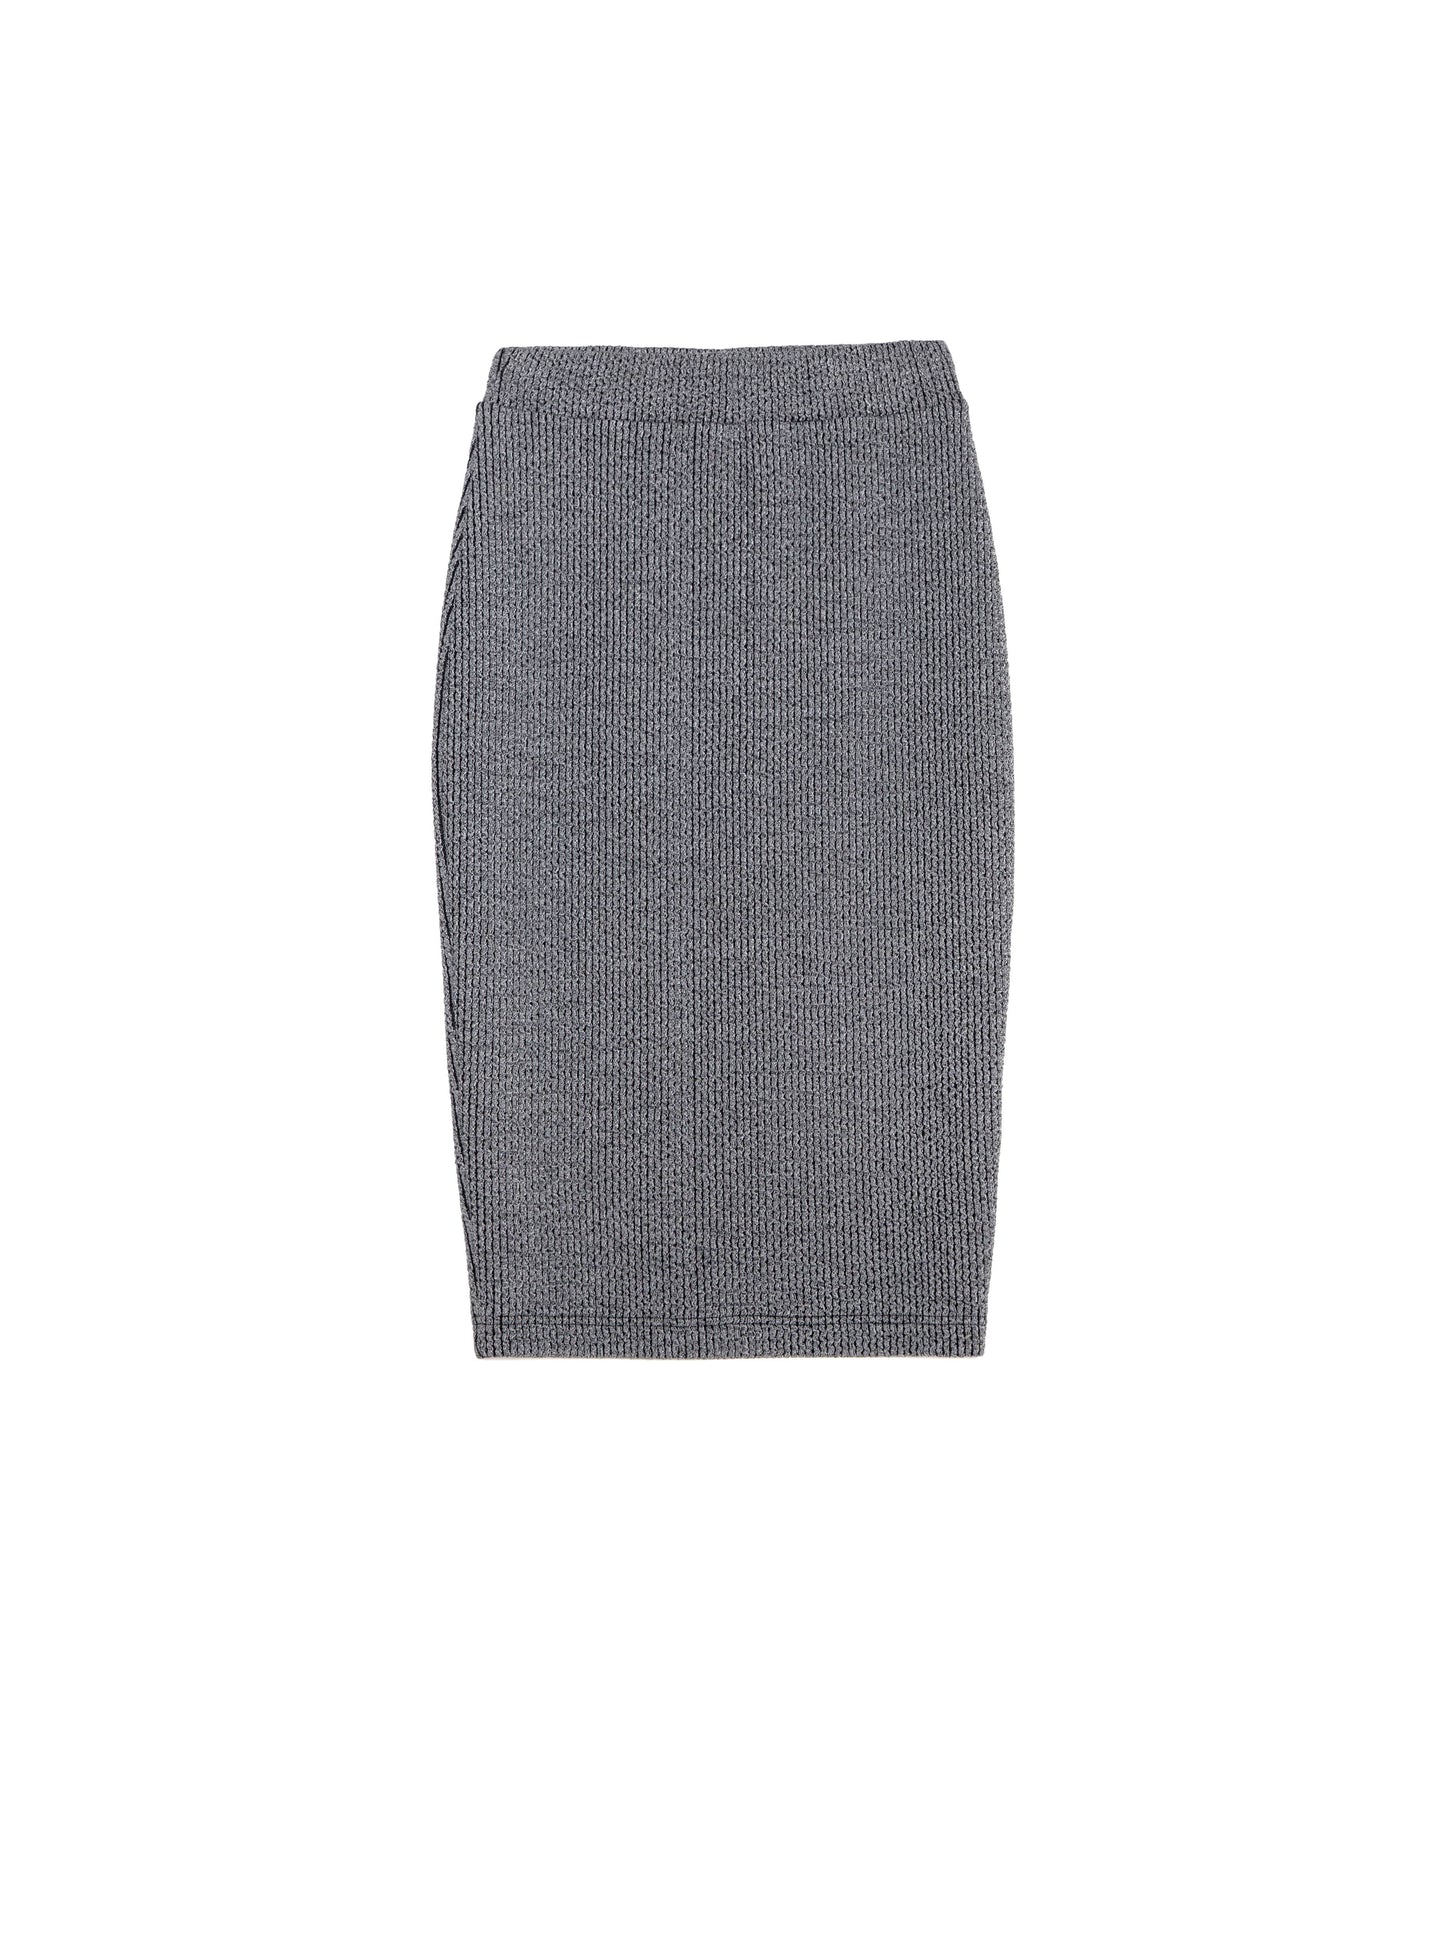 Conte Women's/Girls Shaping Pencil Skirt - MAX SLIM #19С-874ТСП